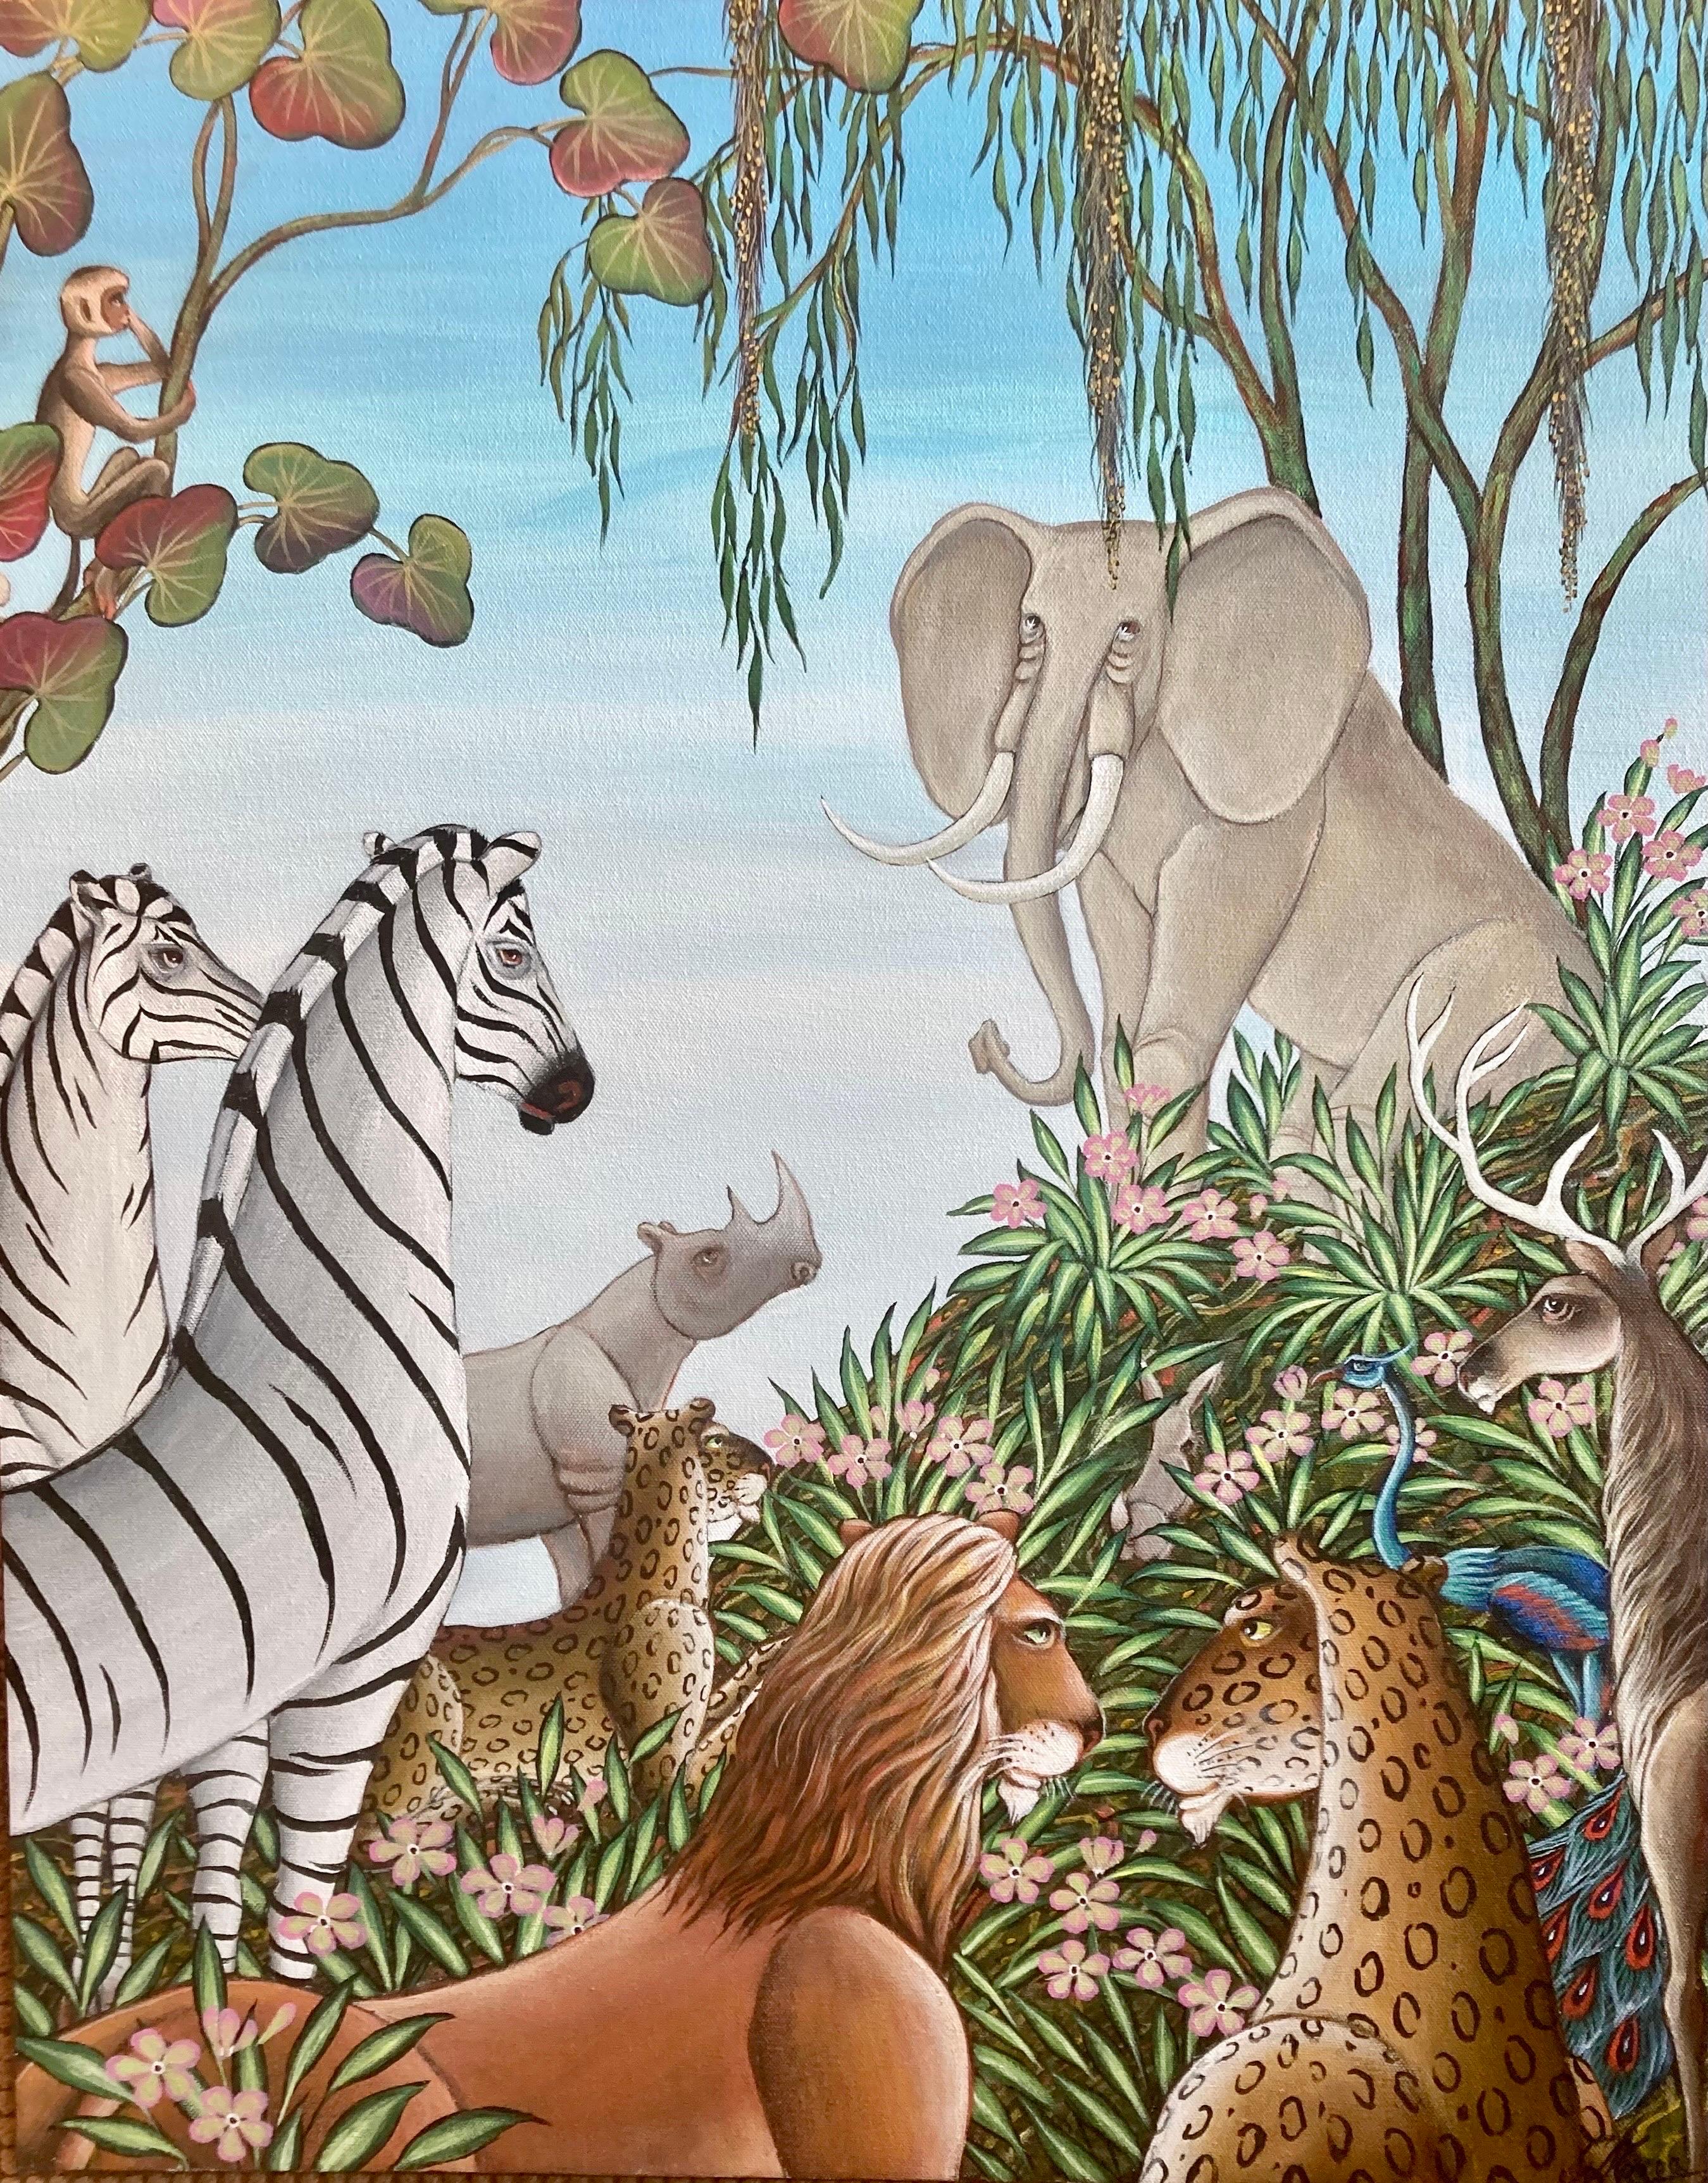 Elephant and Lions, Animal Paradise Jungle Painting Surrealist Art Gustavo Novoa